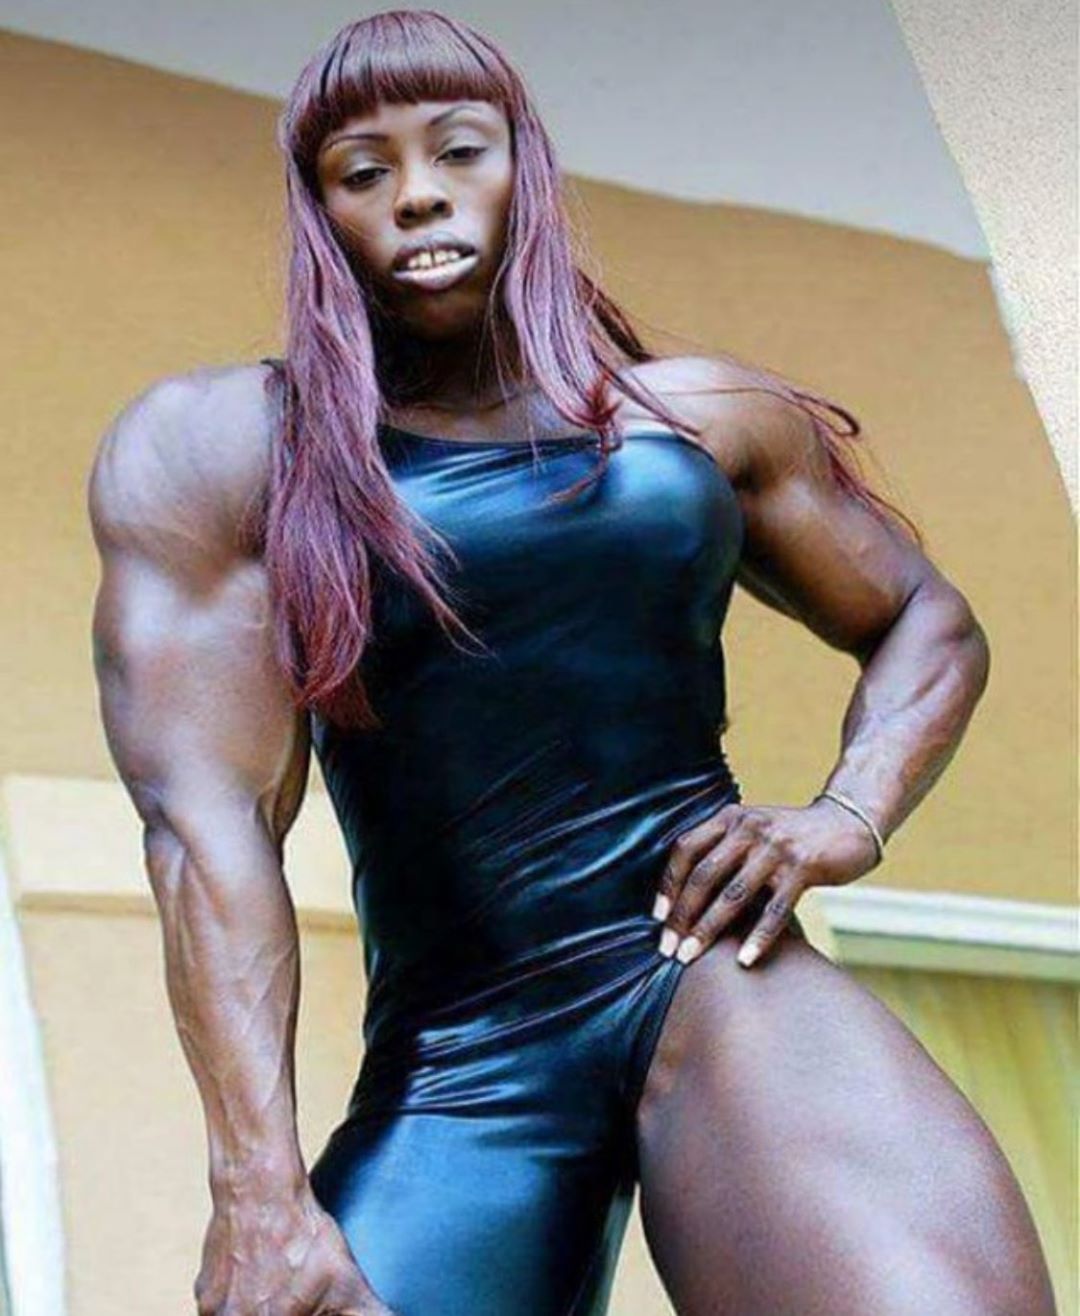 Ebony women bodybuilders dominating men